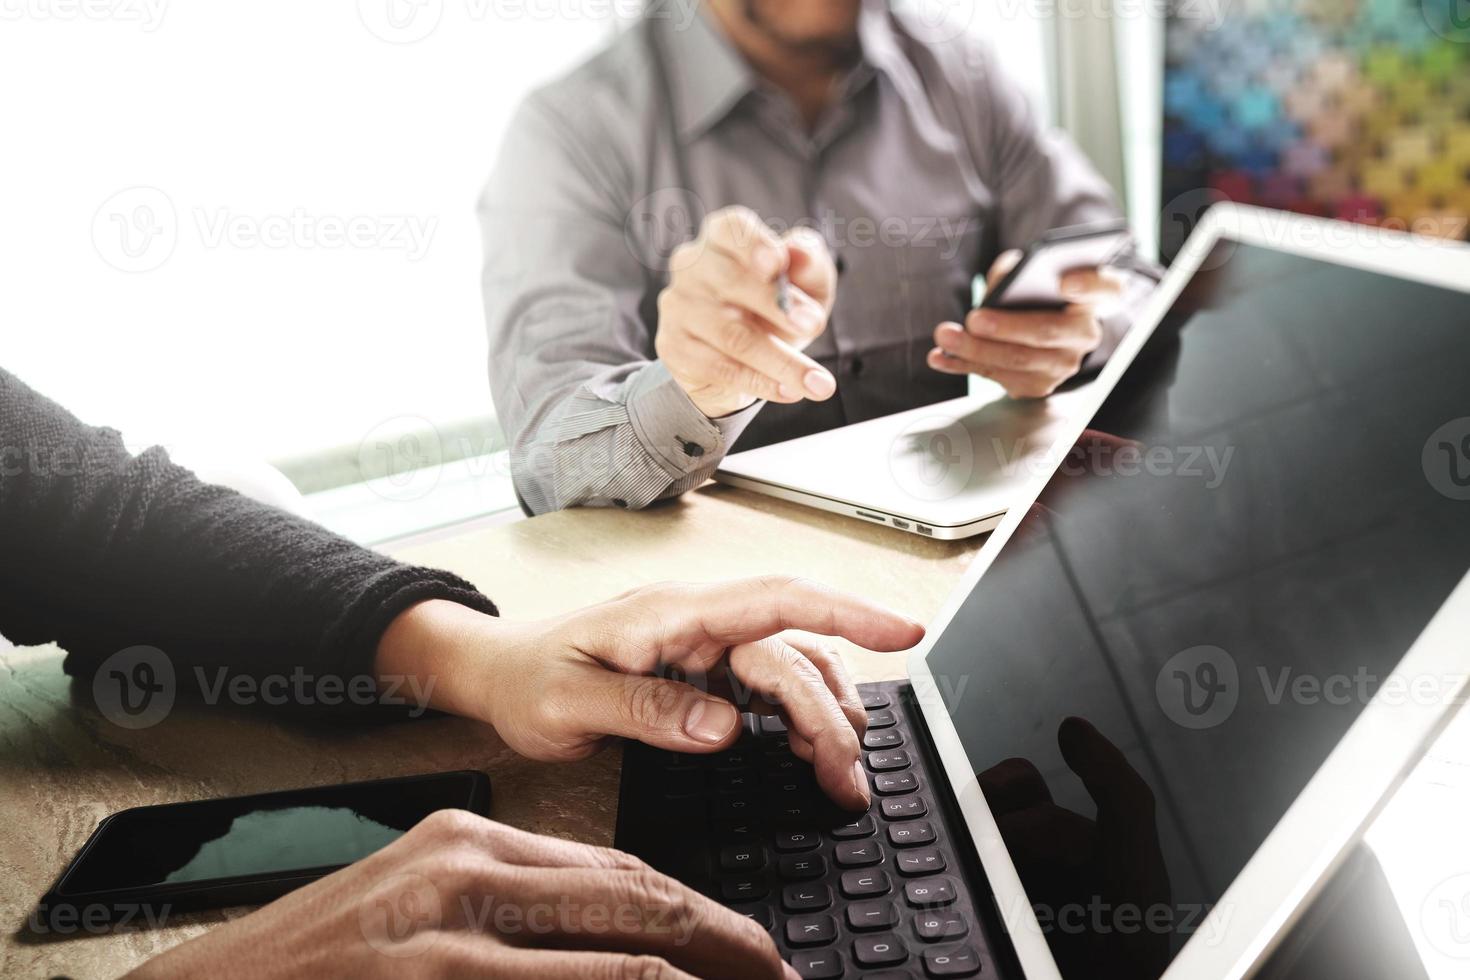 twee collega webdesigner bespreken gegevens en digitale tablet docking toetsenbord en computer laptop met smartphone en ontwerp diagram op marmeren bureau, zonlicht effect foto